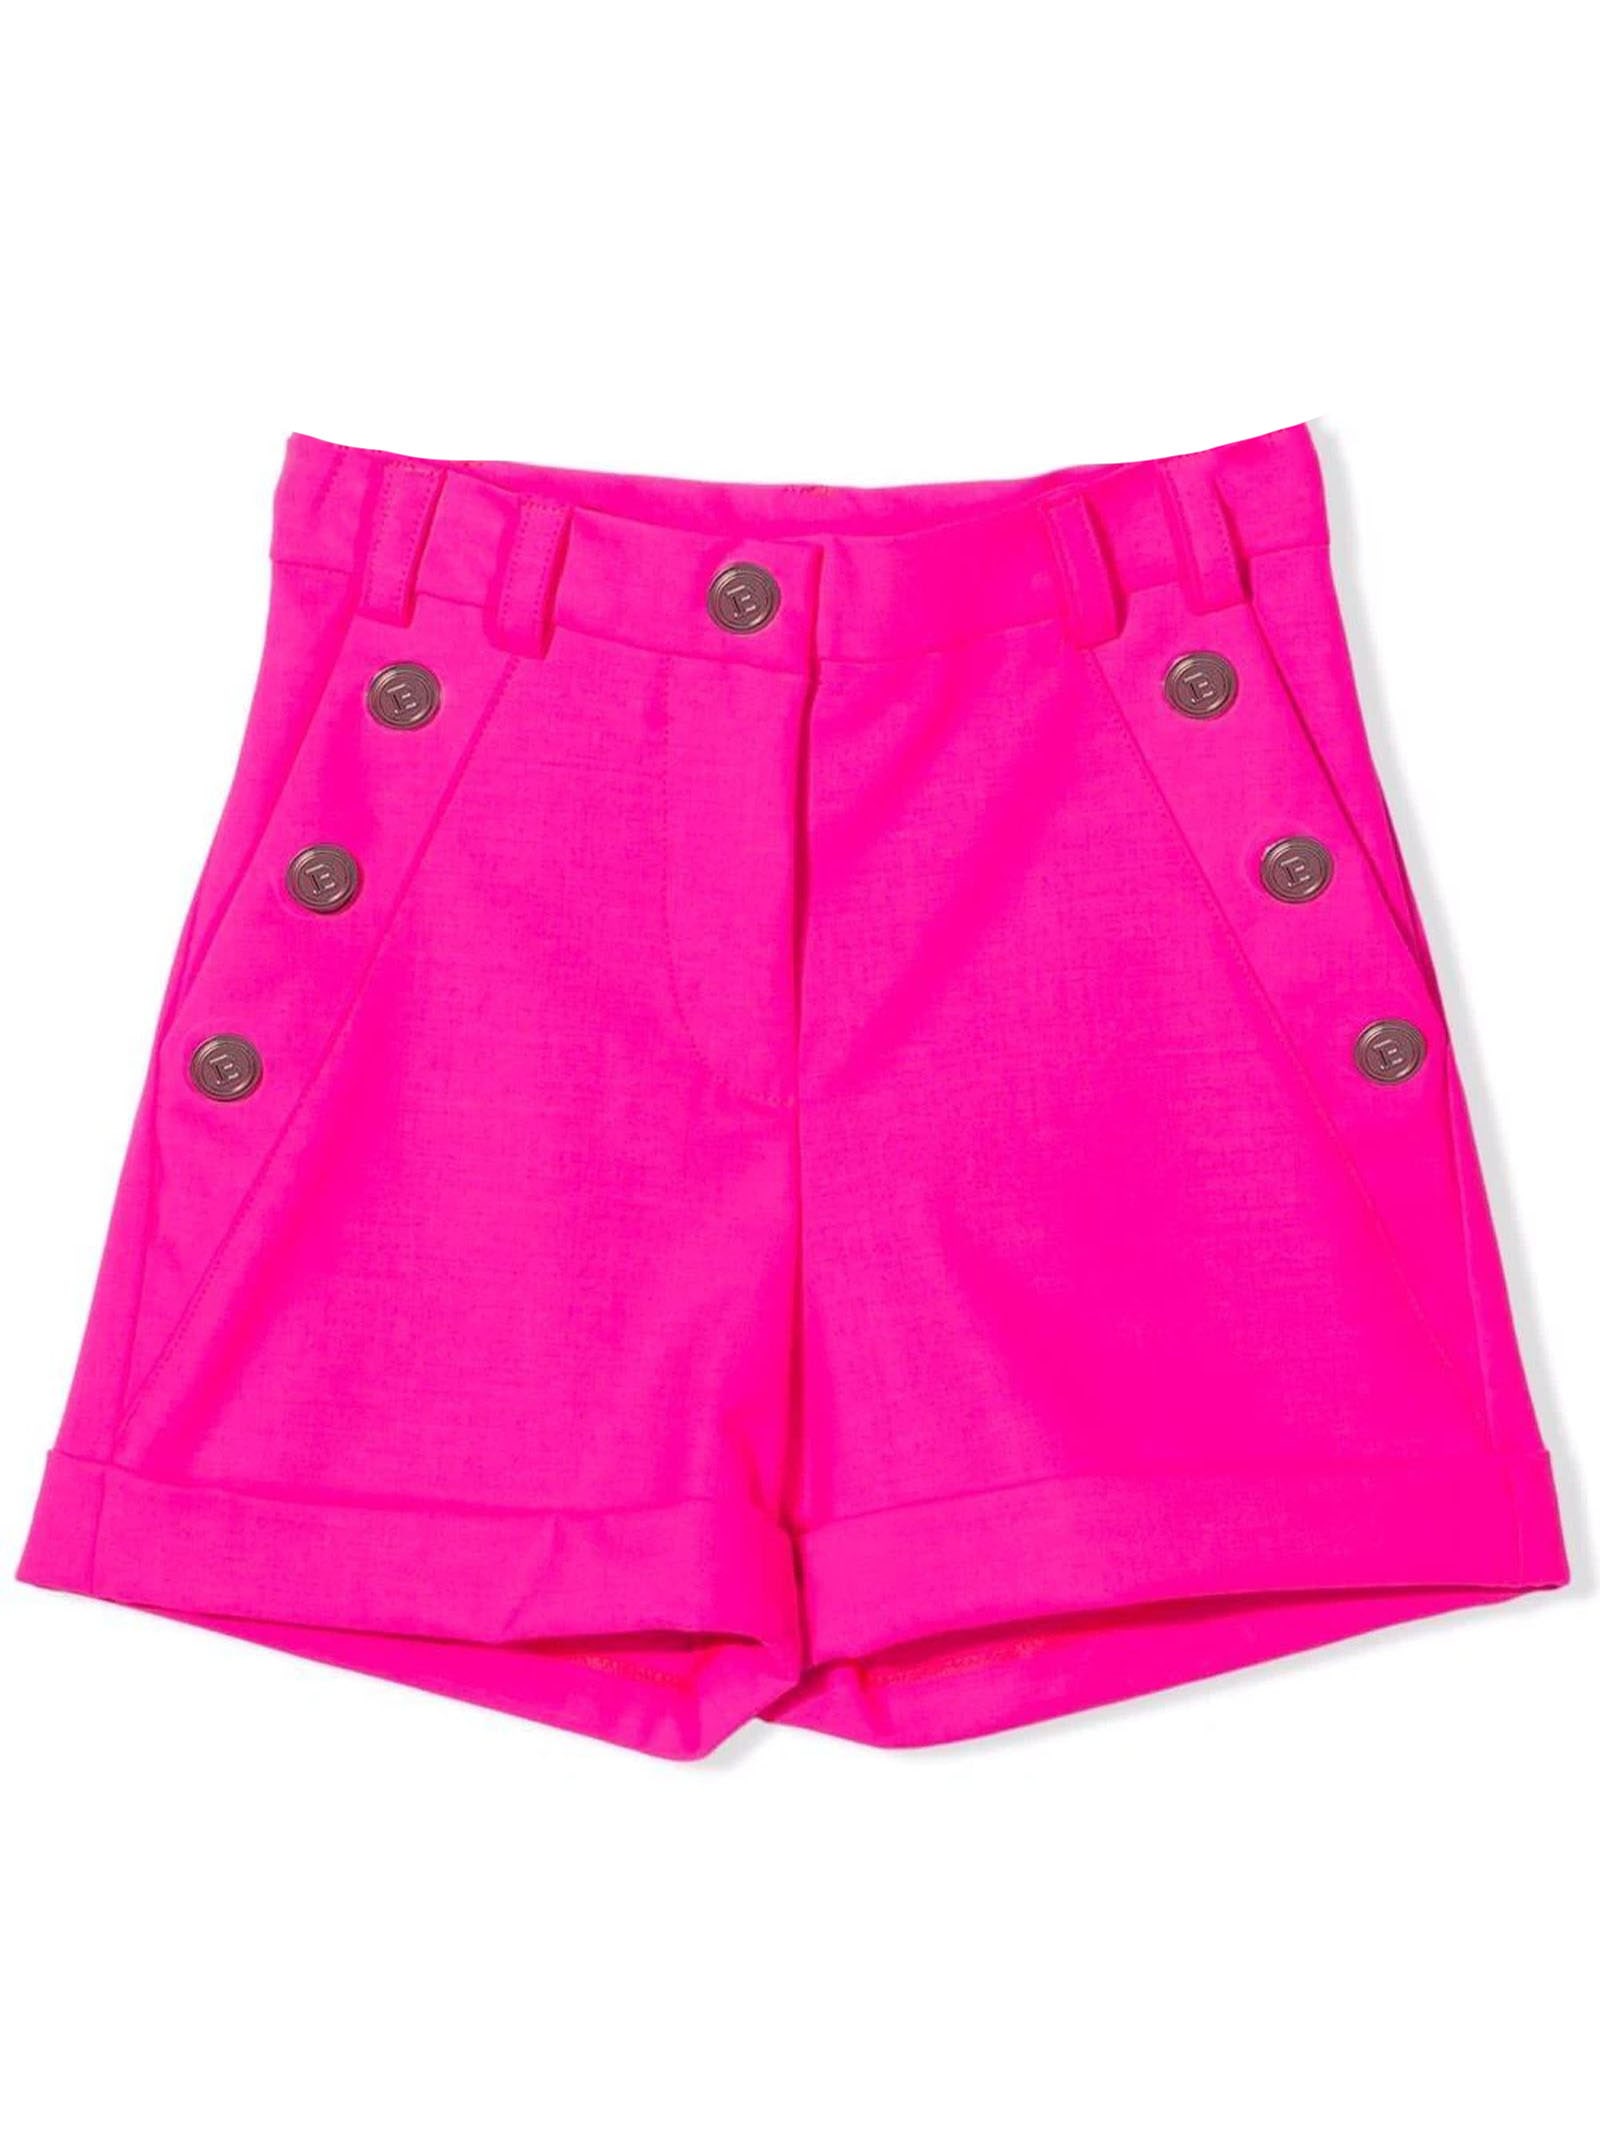 Balmain Fuschia Pink Virgin Wool Tailored Shorts